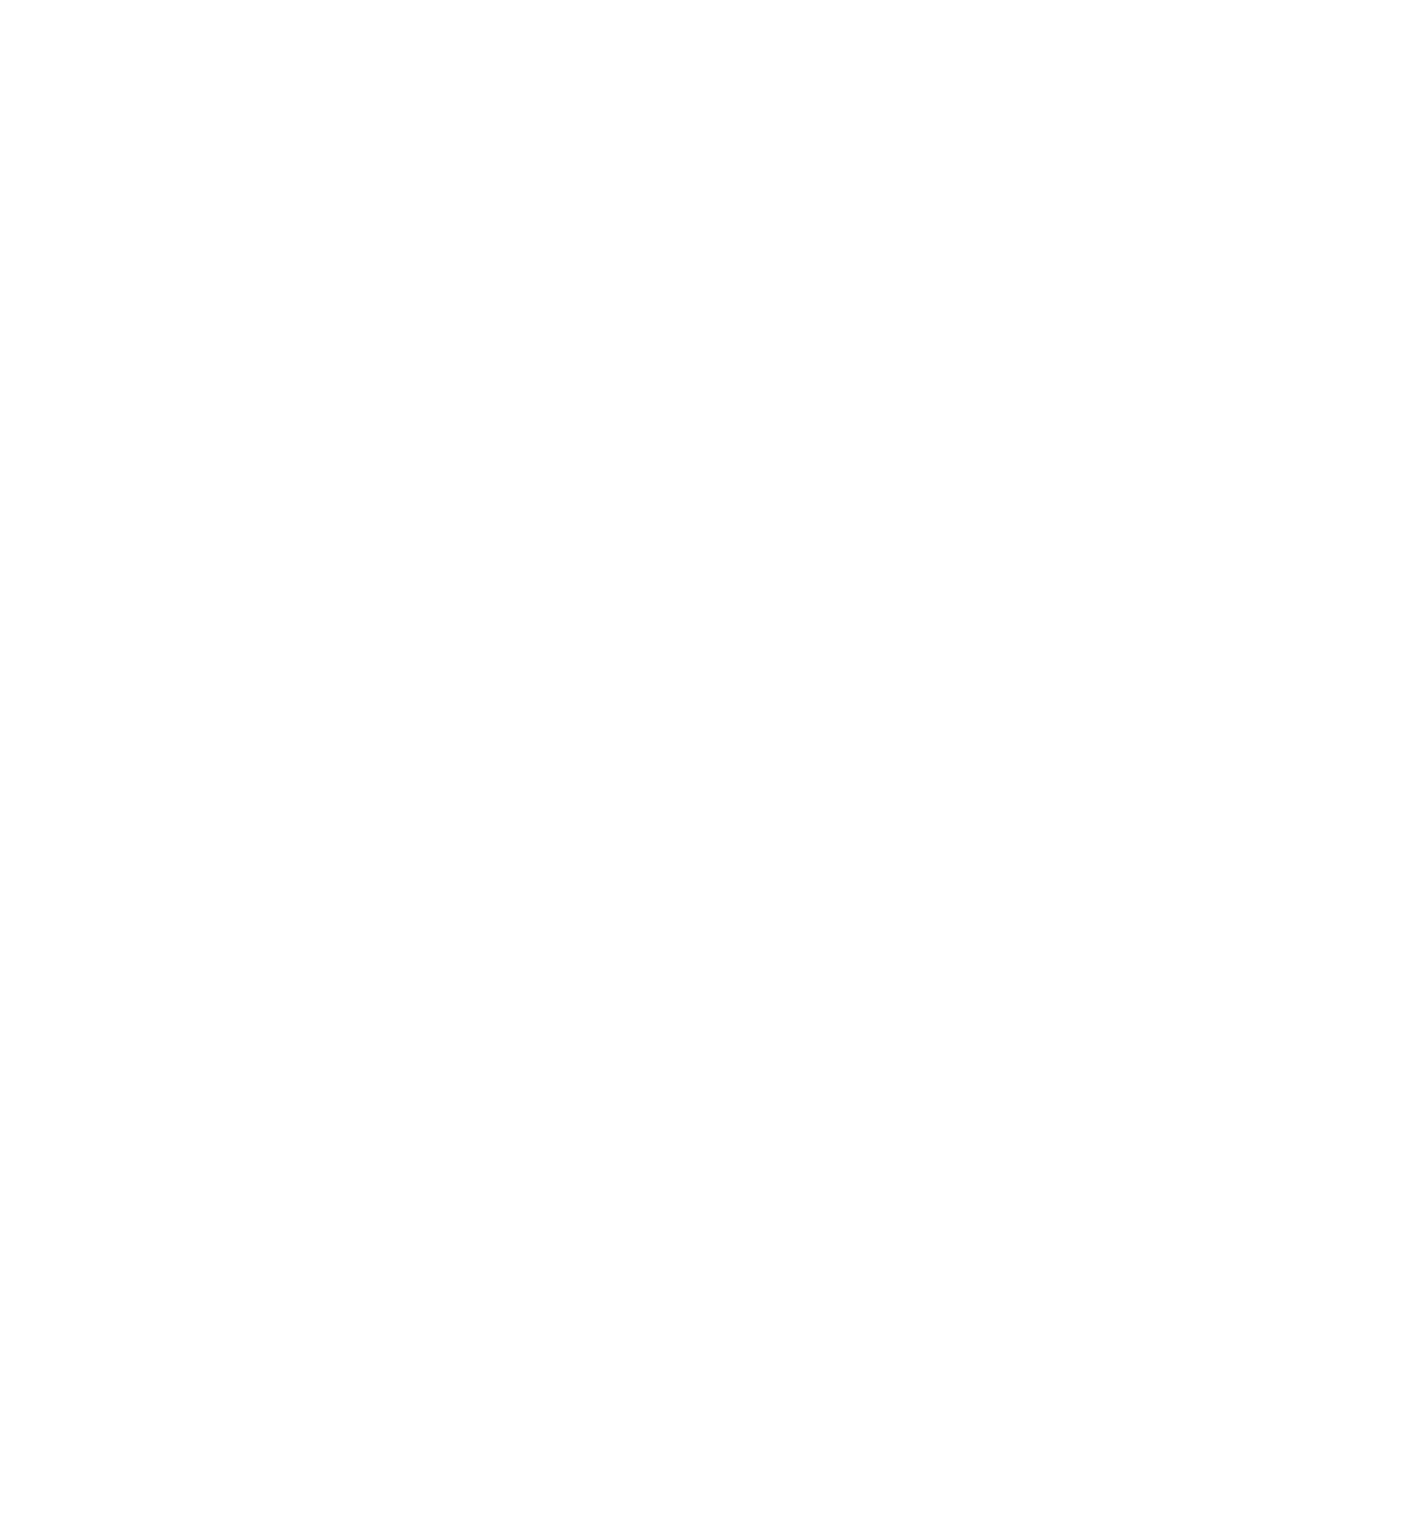 Trimble logo for dark backgrounds (transparent PNG)